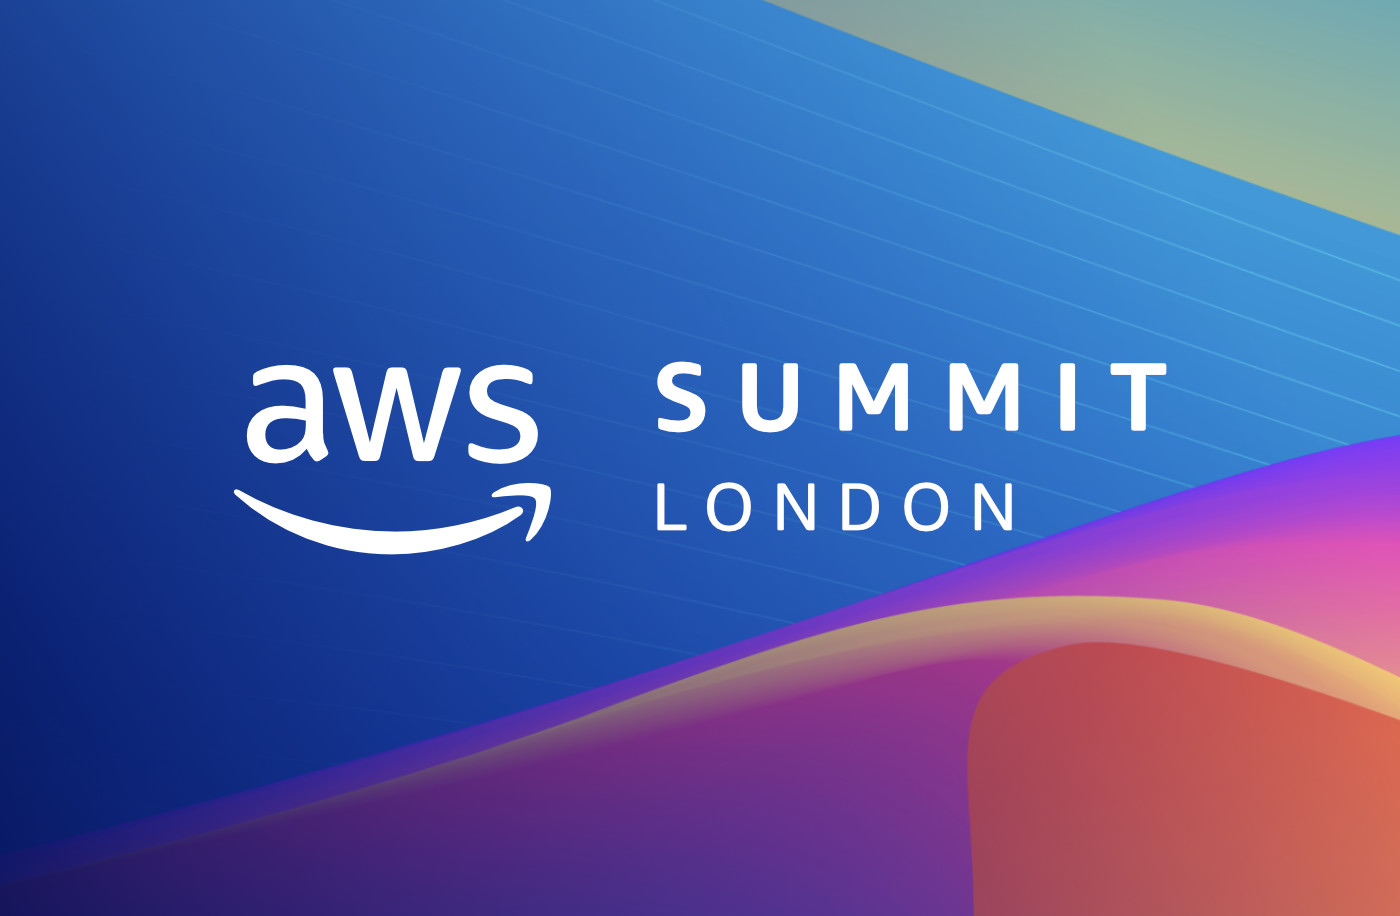 AWS Summit London Recap